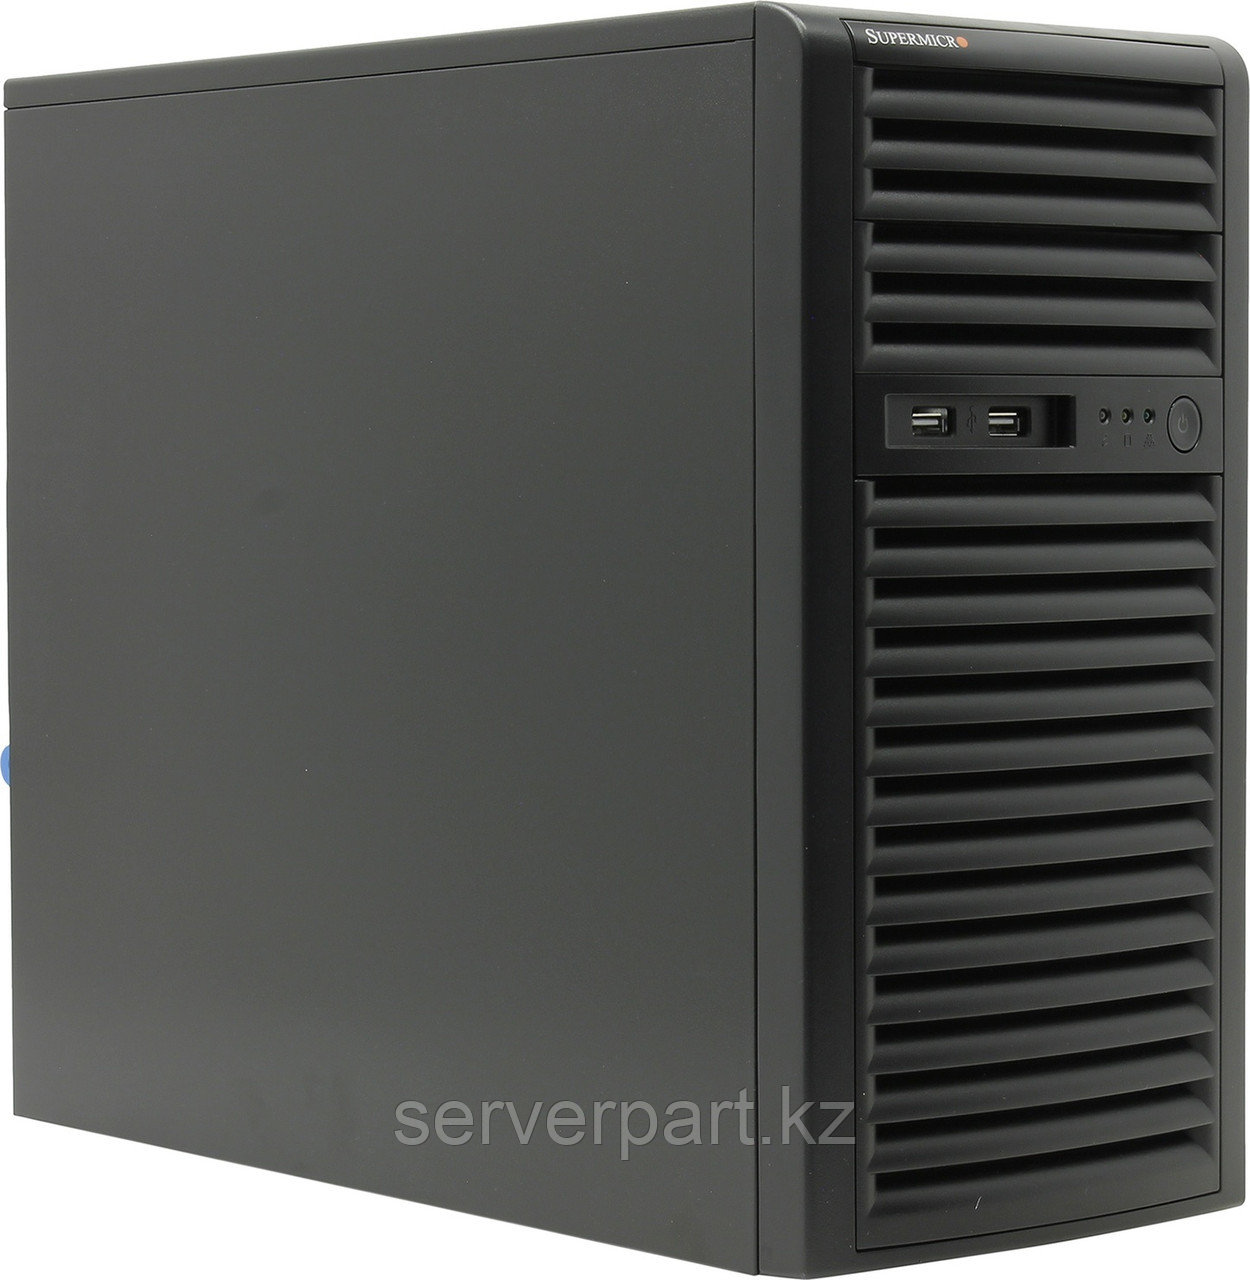 Сервер Supermicro SYS-5039D Tower/4-core intel xeon E3-1220v6 3GHz/16GB UDIMM nECC/1x240GB SSD MU Hyb